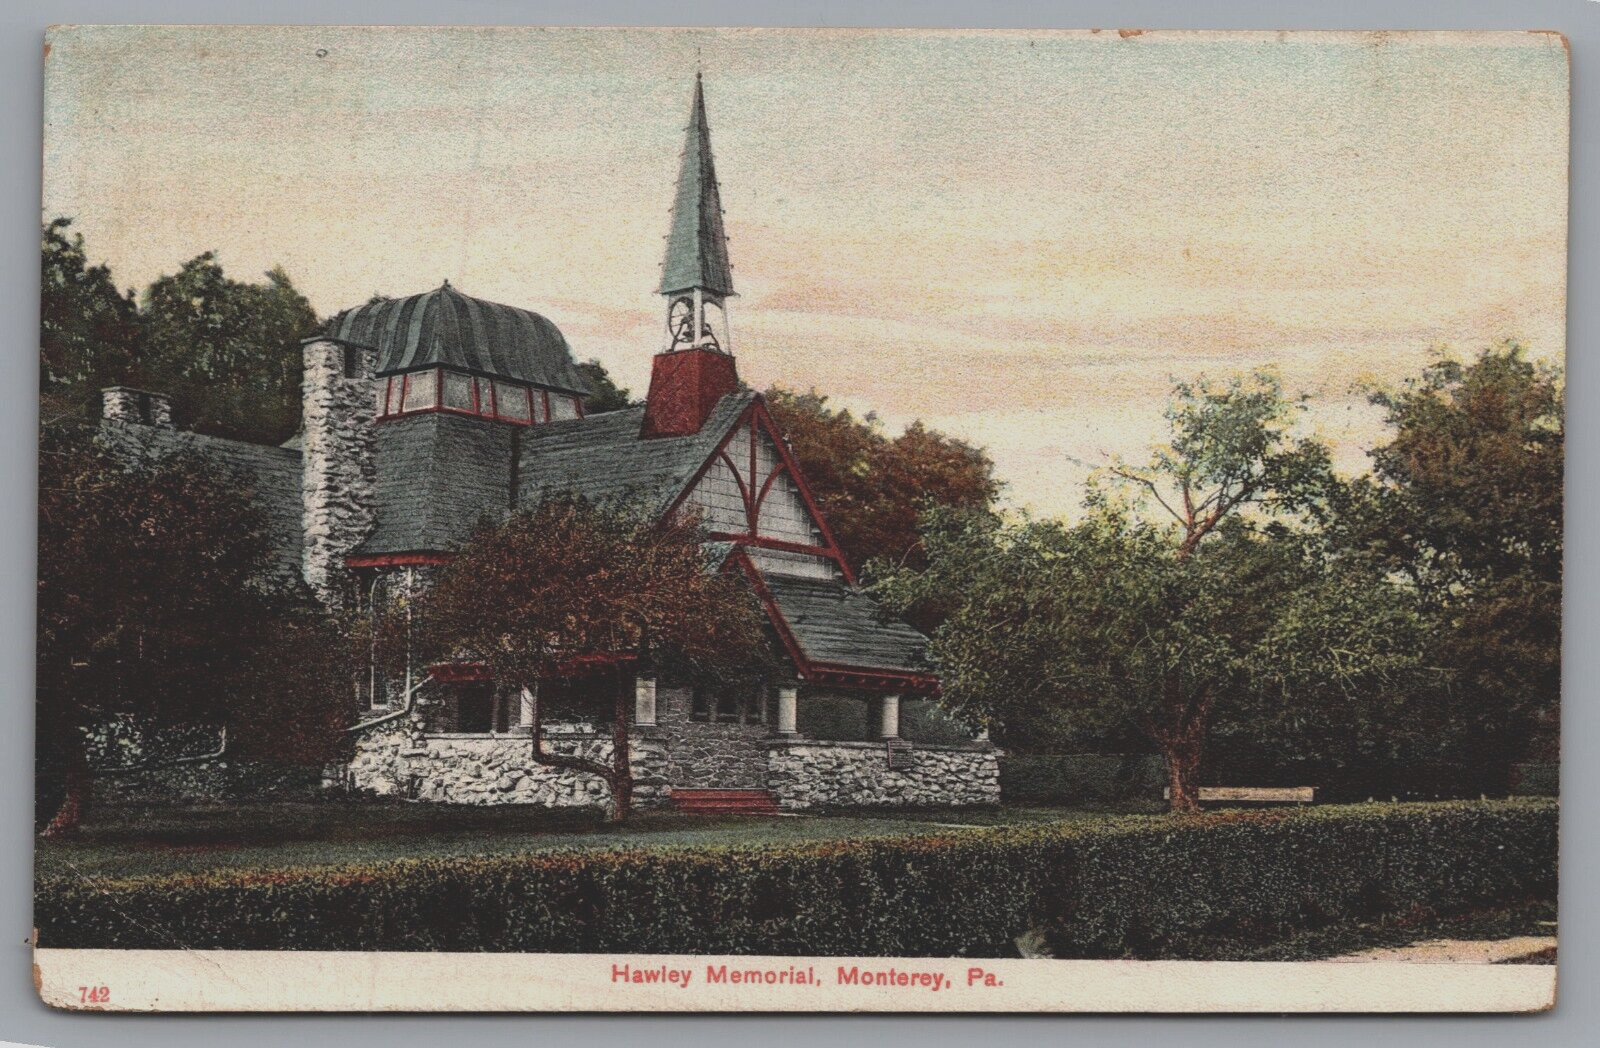 Hawley Memorial Presbyterian Church Monterey Pennsylvania Vintage Postcard 1909